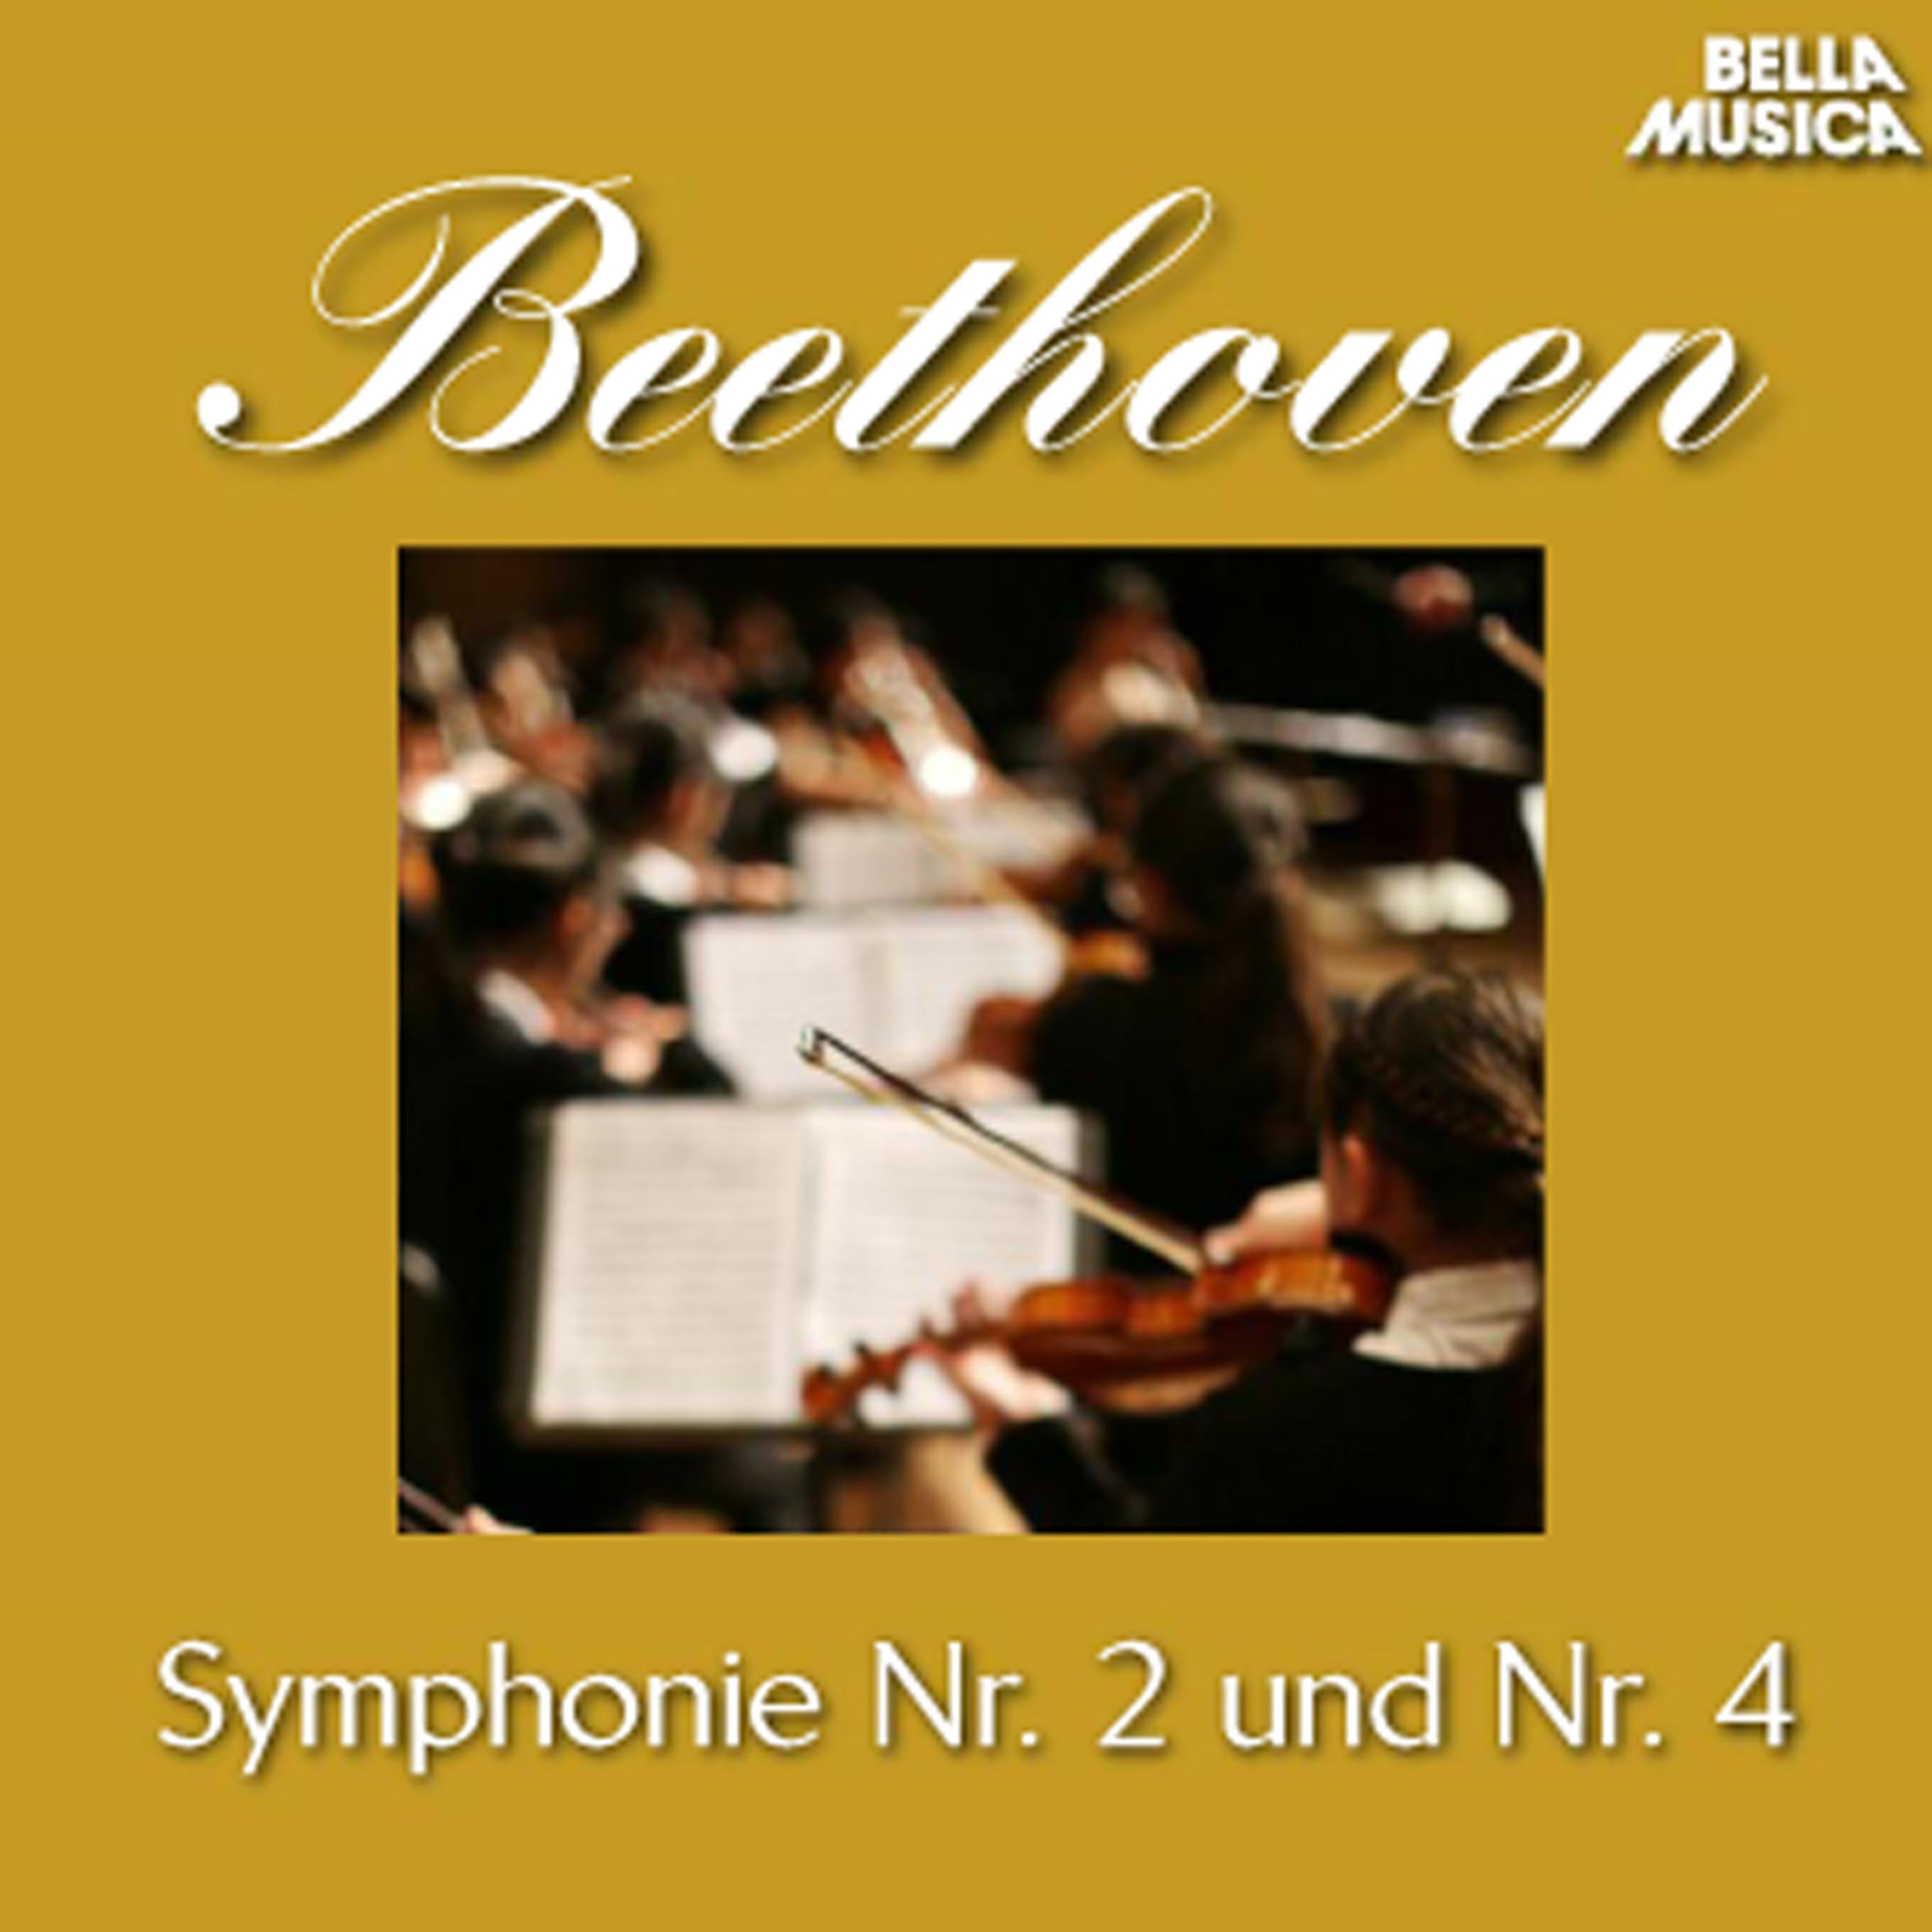 Sinfonie No. 4 fü r Orchester in BFlat Major, Op. 60: II. Adagio